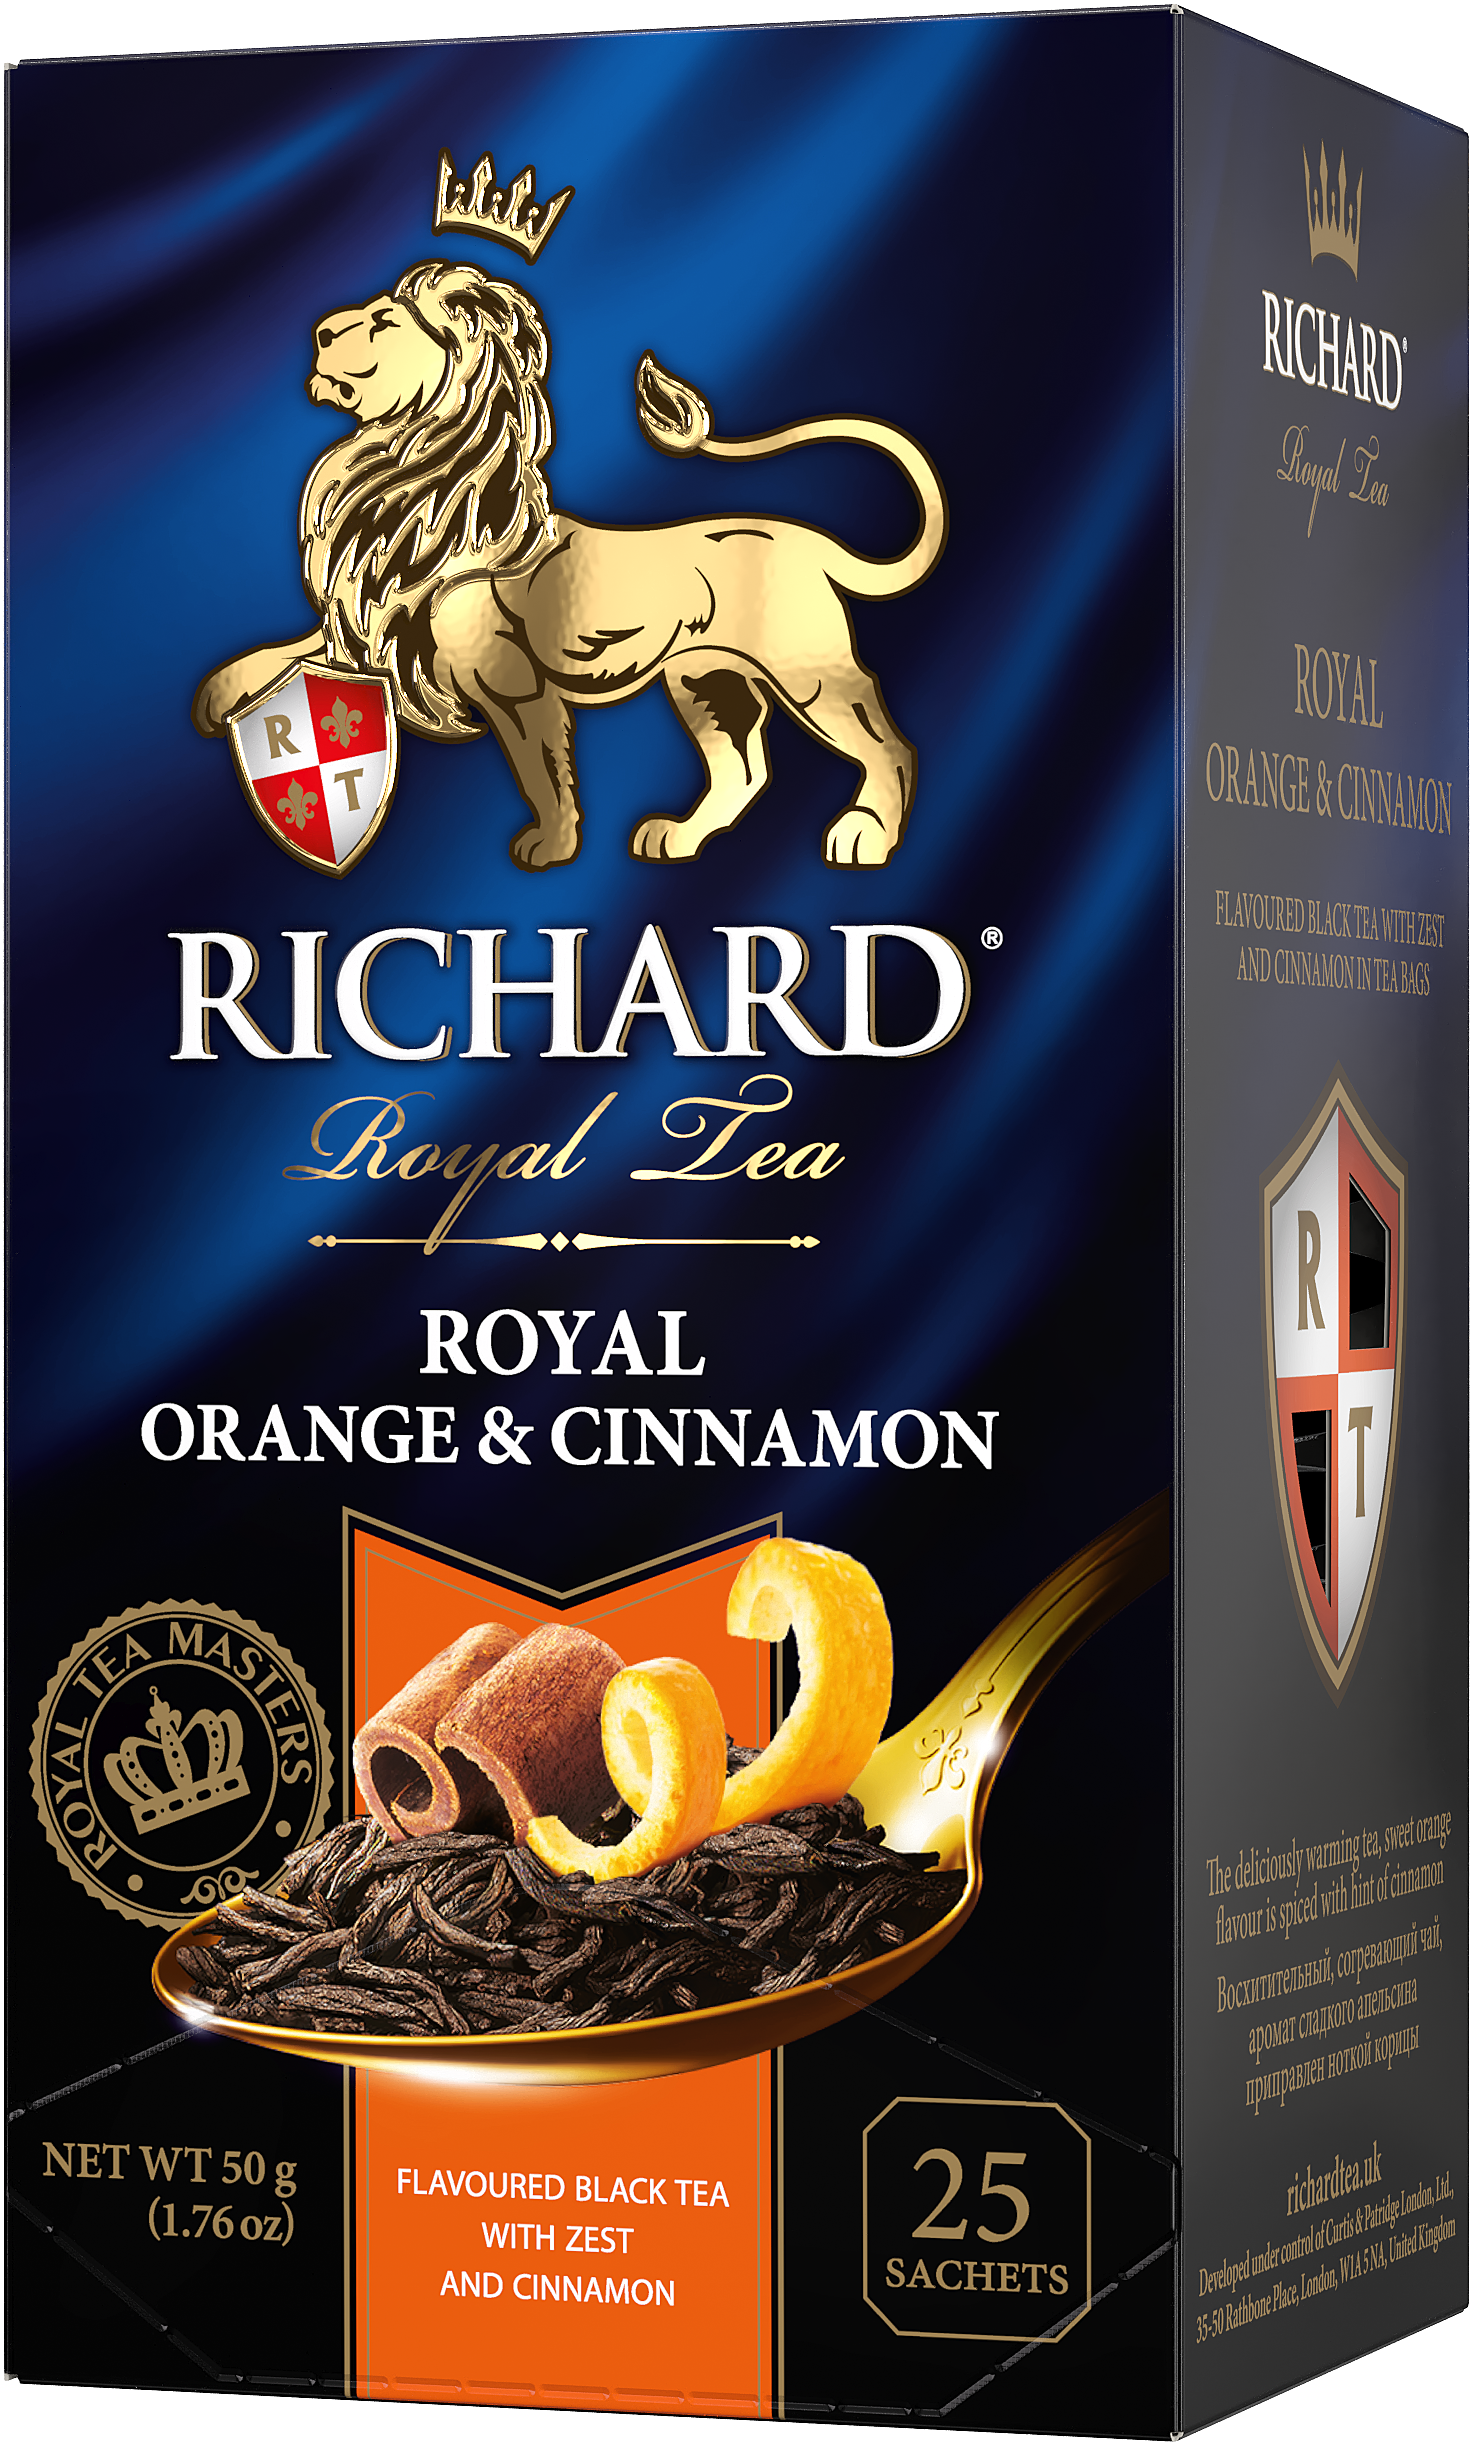 Richard "Royal Orange & Cinnamon" black flavored tea 25 sachets, 50 g